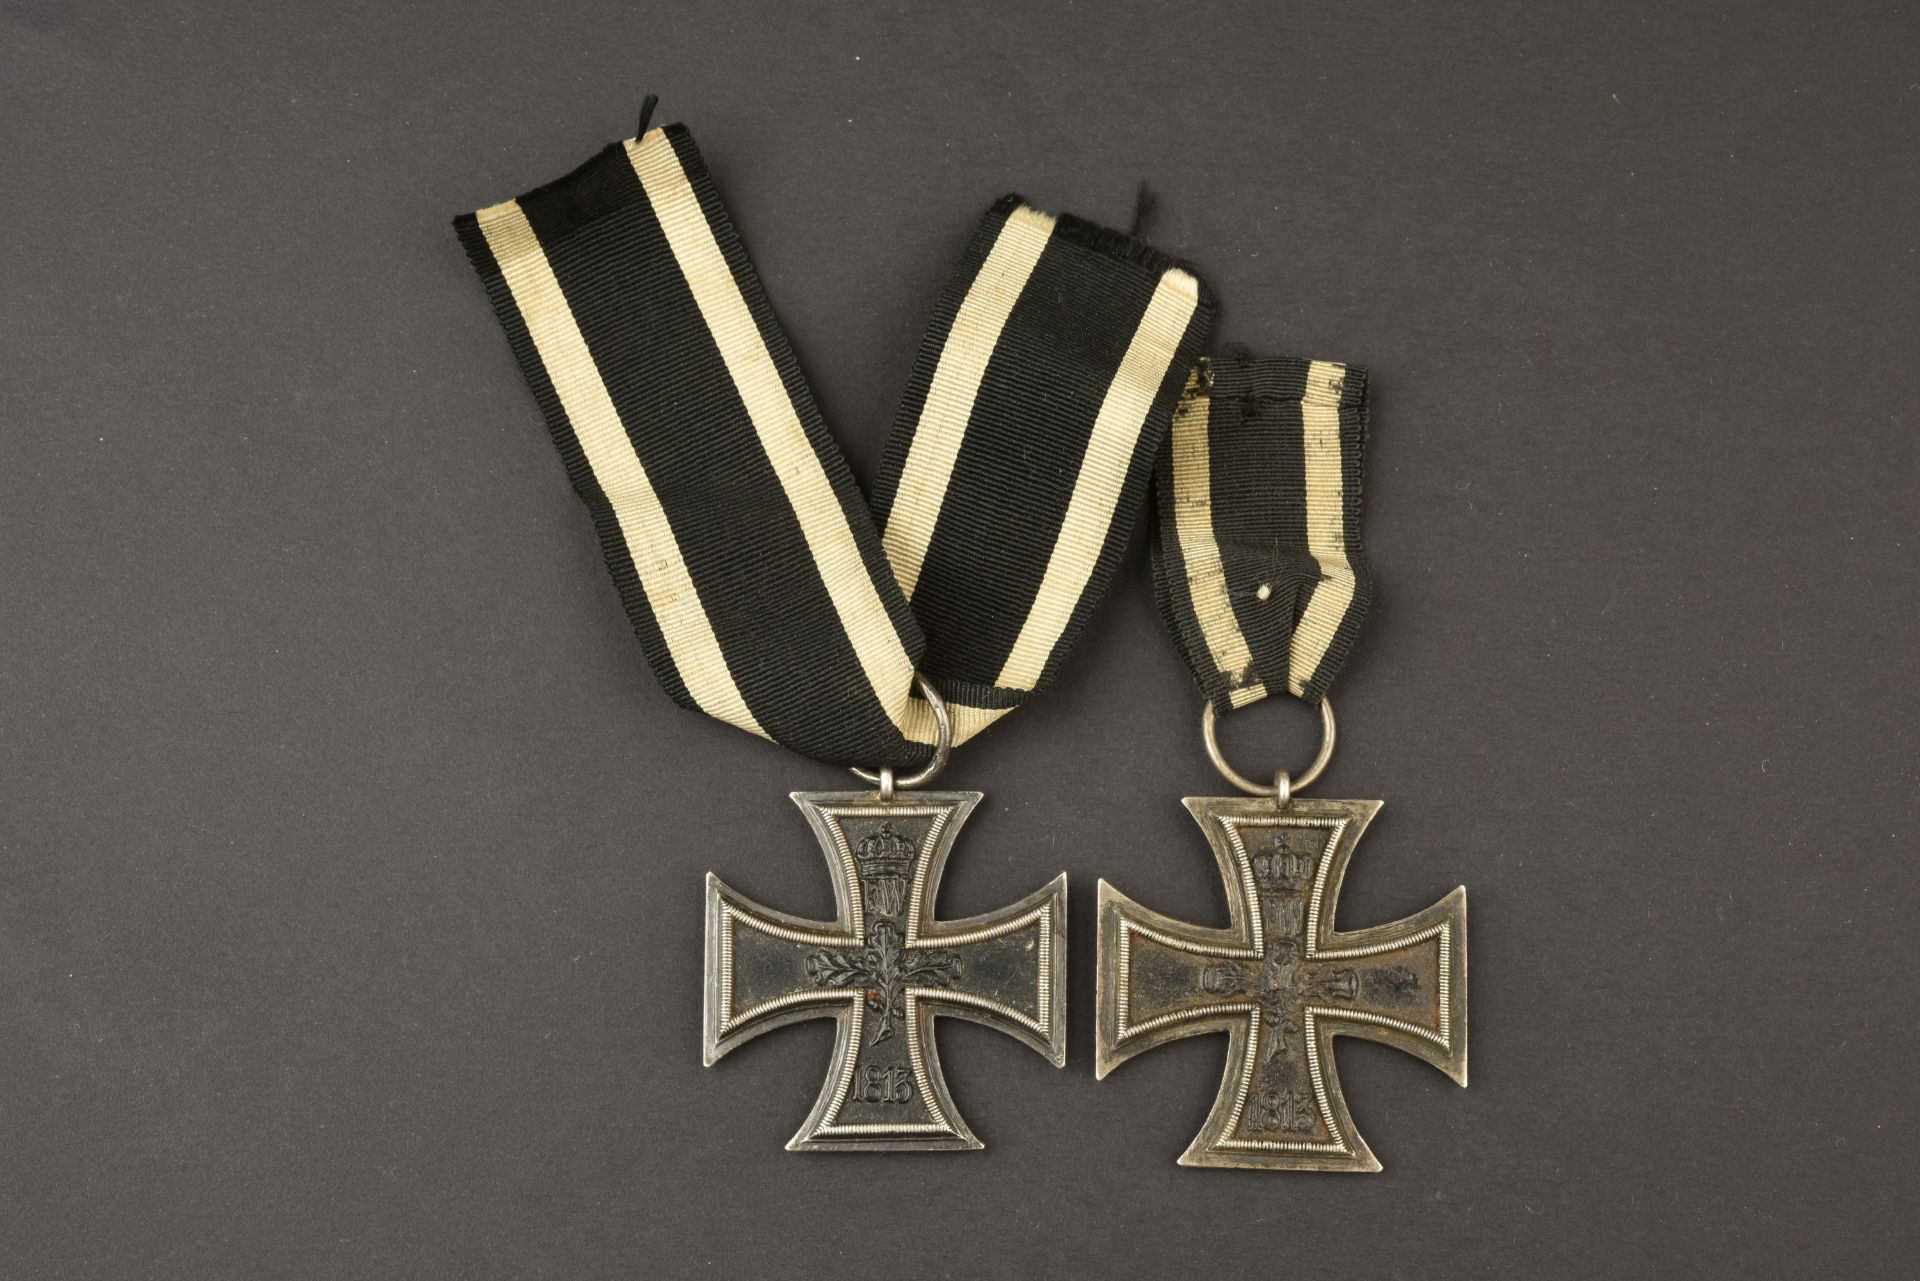 Croix de fer 2nd classe WWI. WWI 2nd Class Iron Cross. - Image 2 of 3